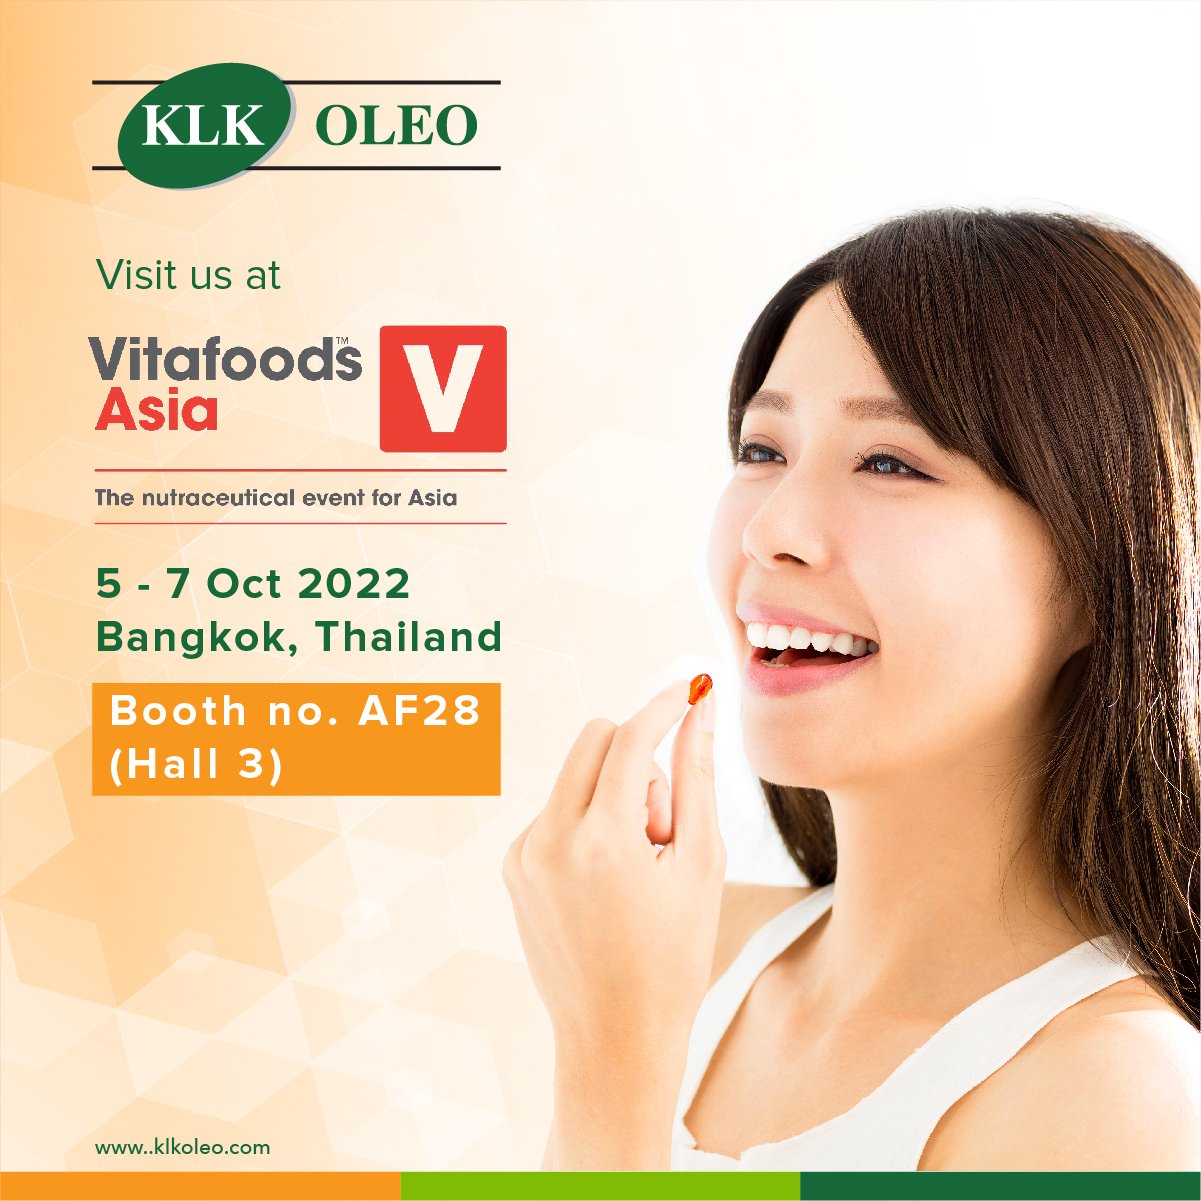 KLK OLEO e-invite to Vitafoods Asia 2022